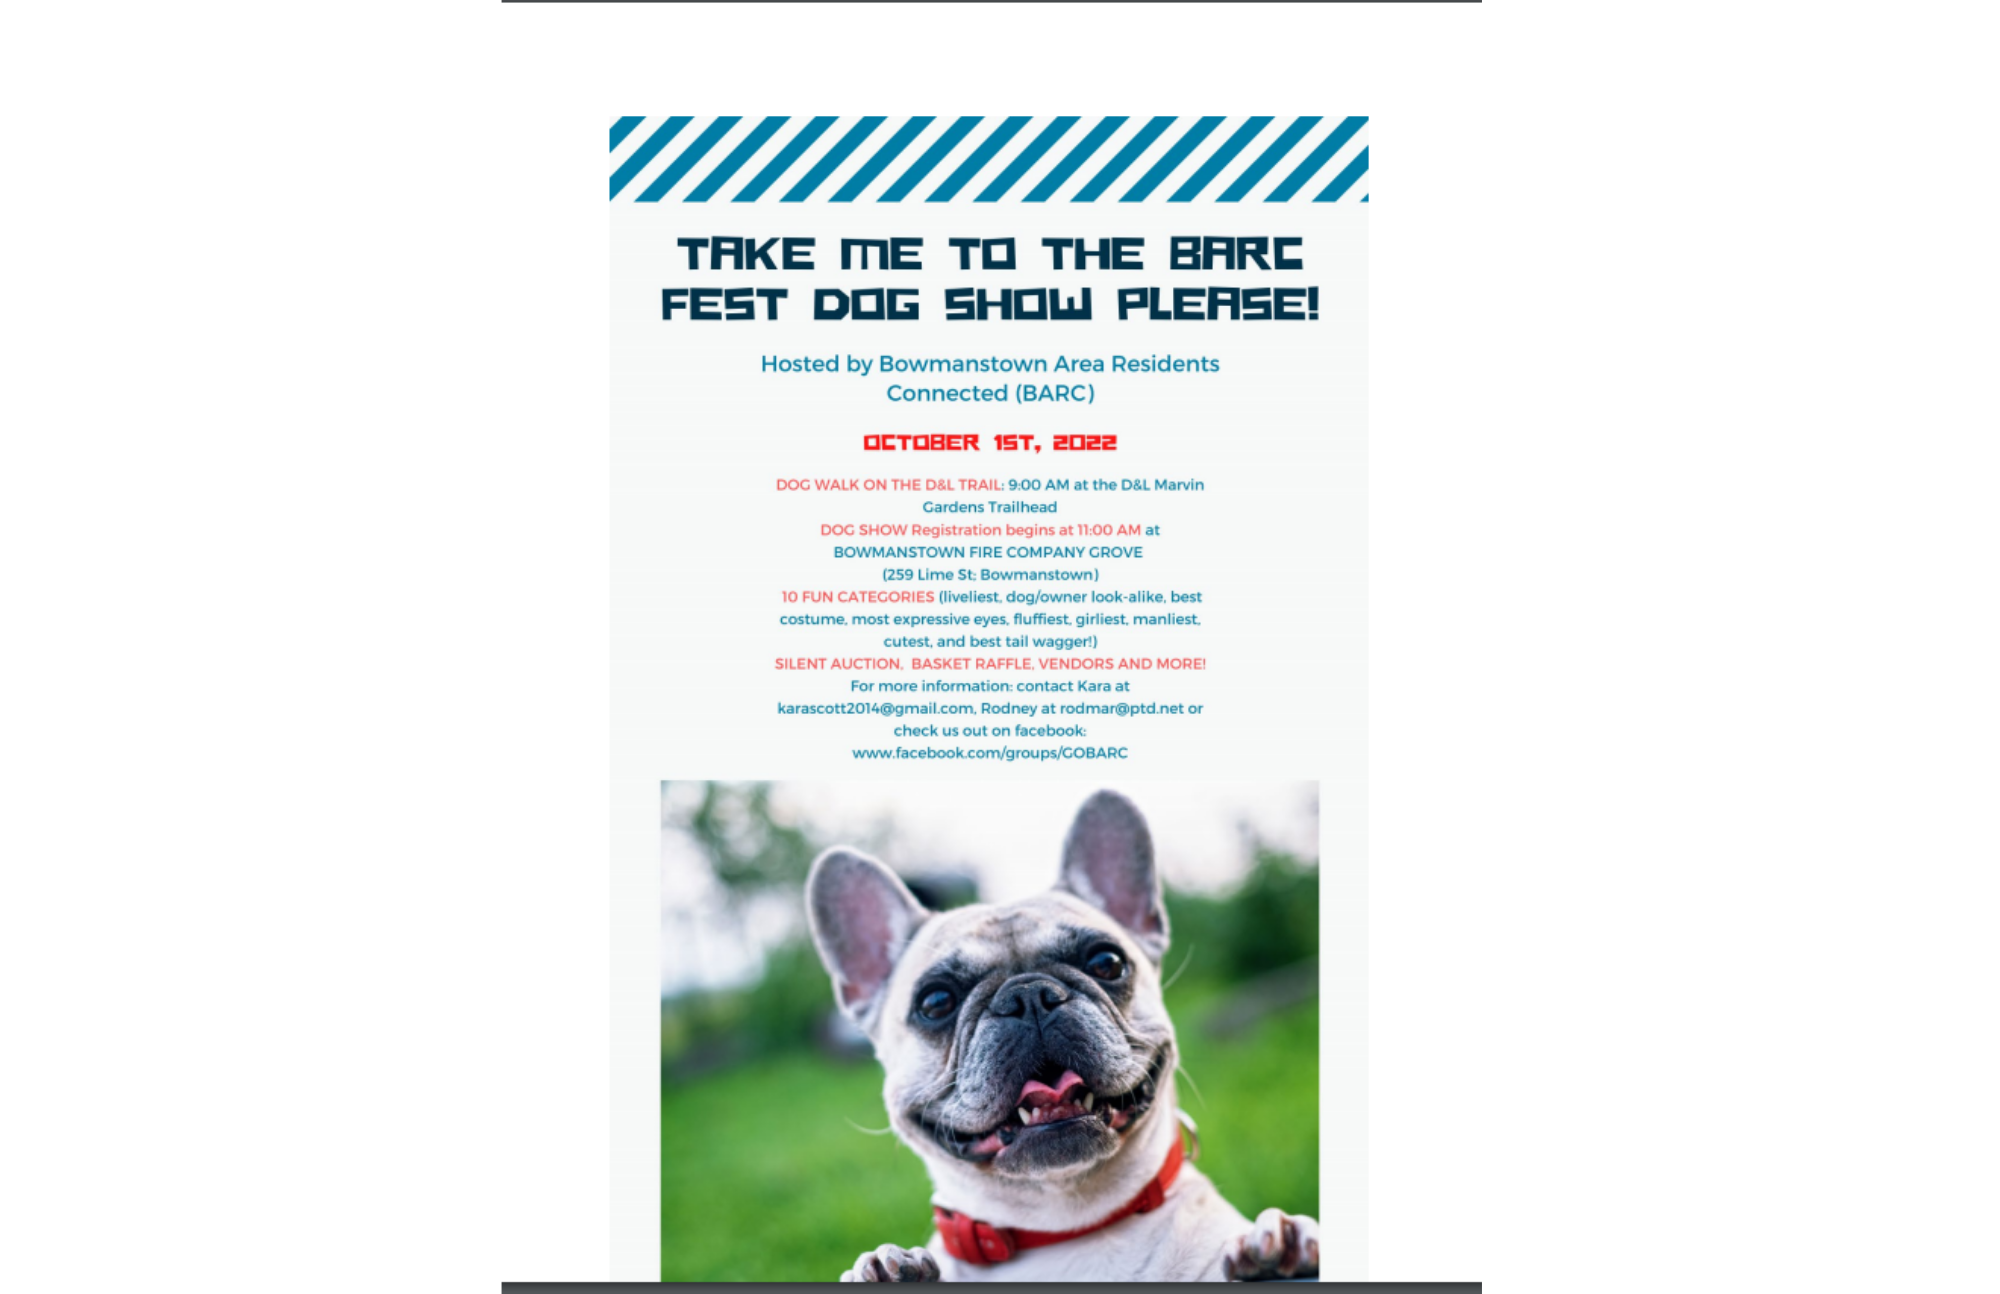 BARC 9th Annual Dog Show